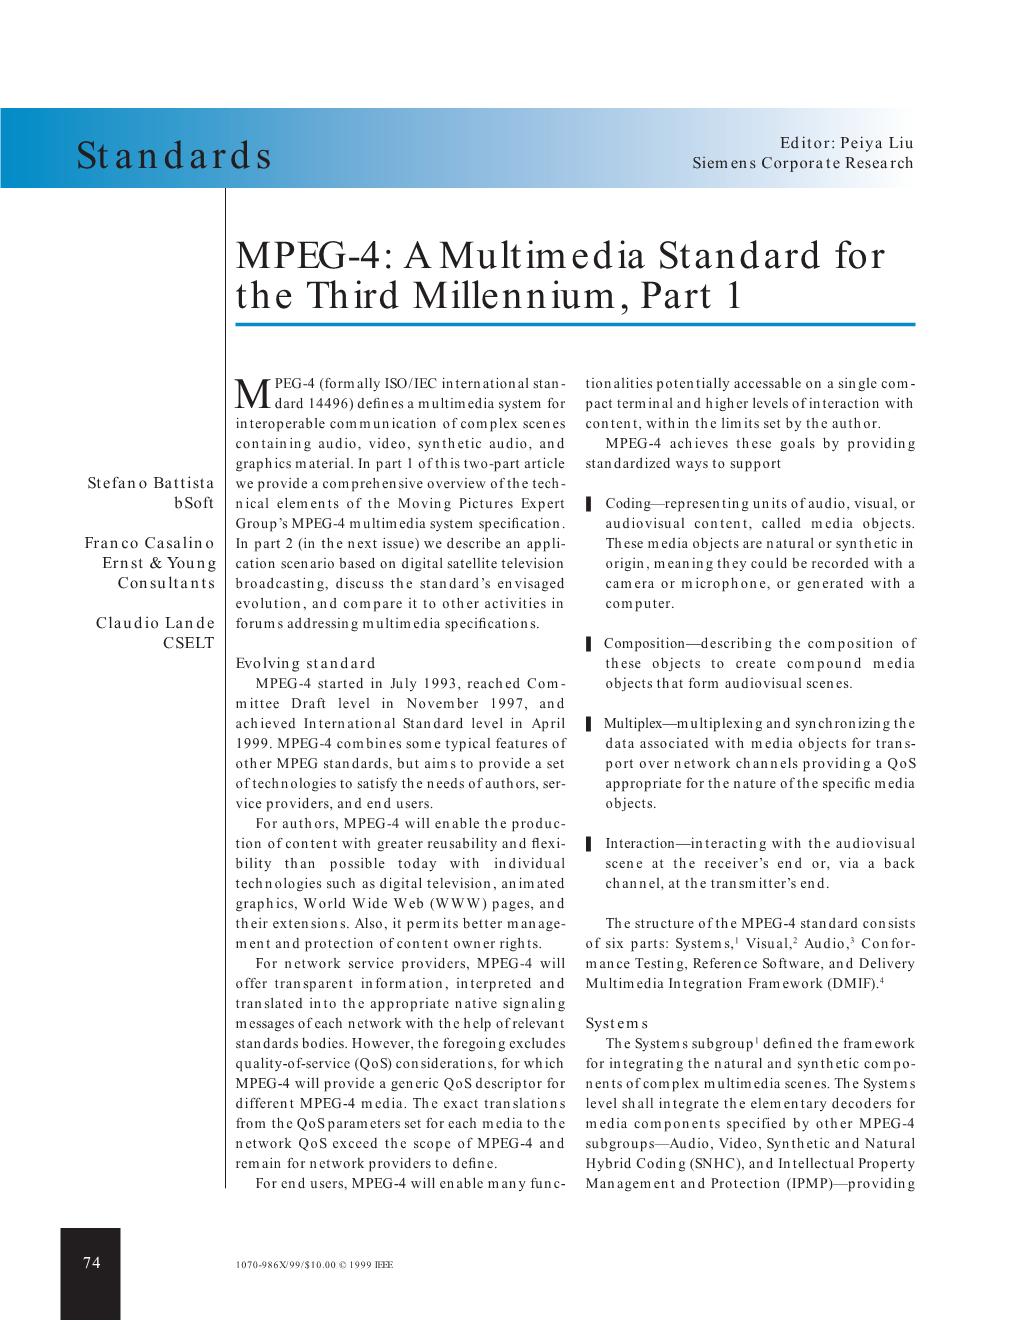 Standards MPEG-4